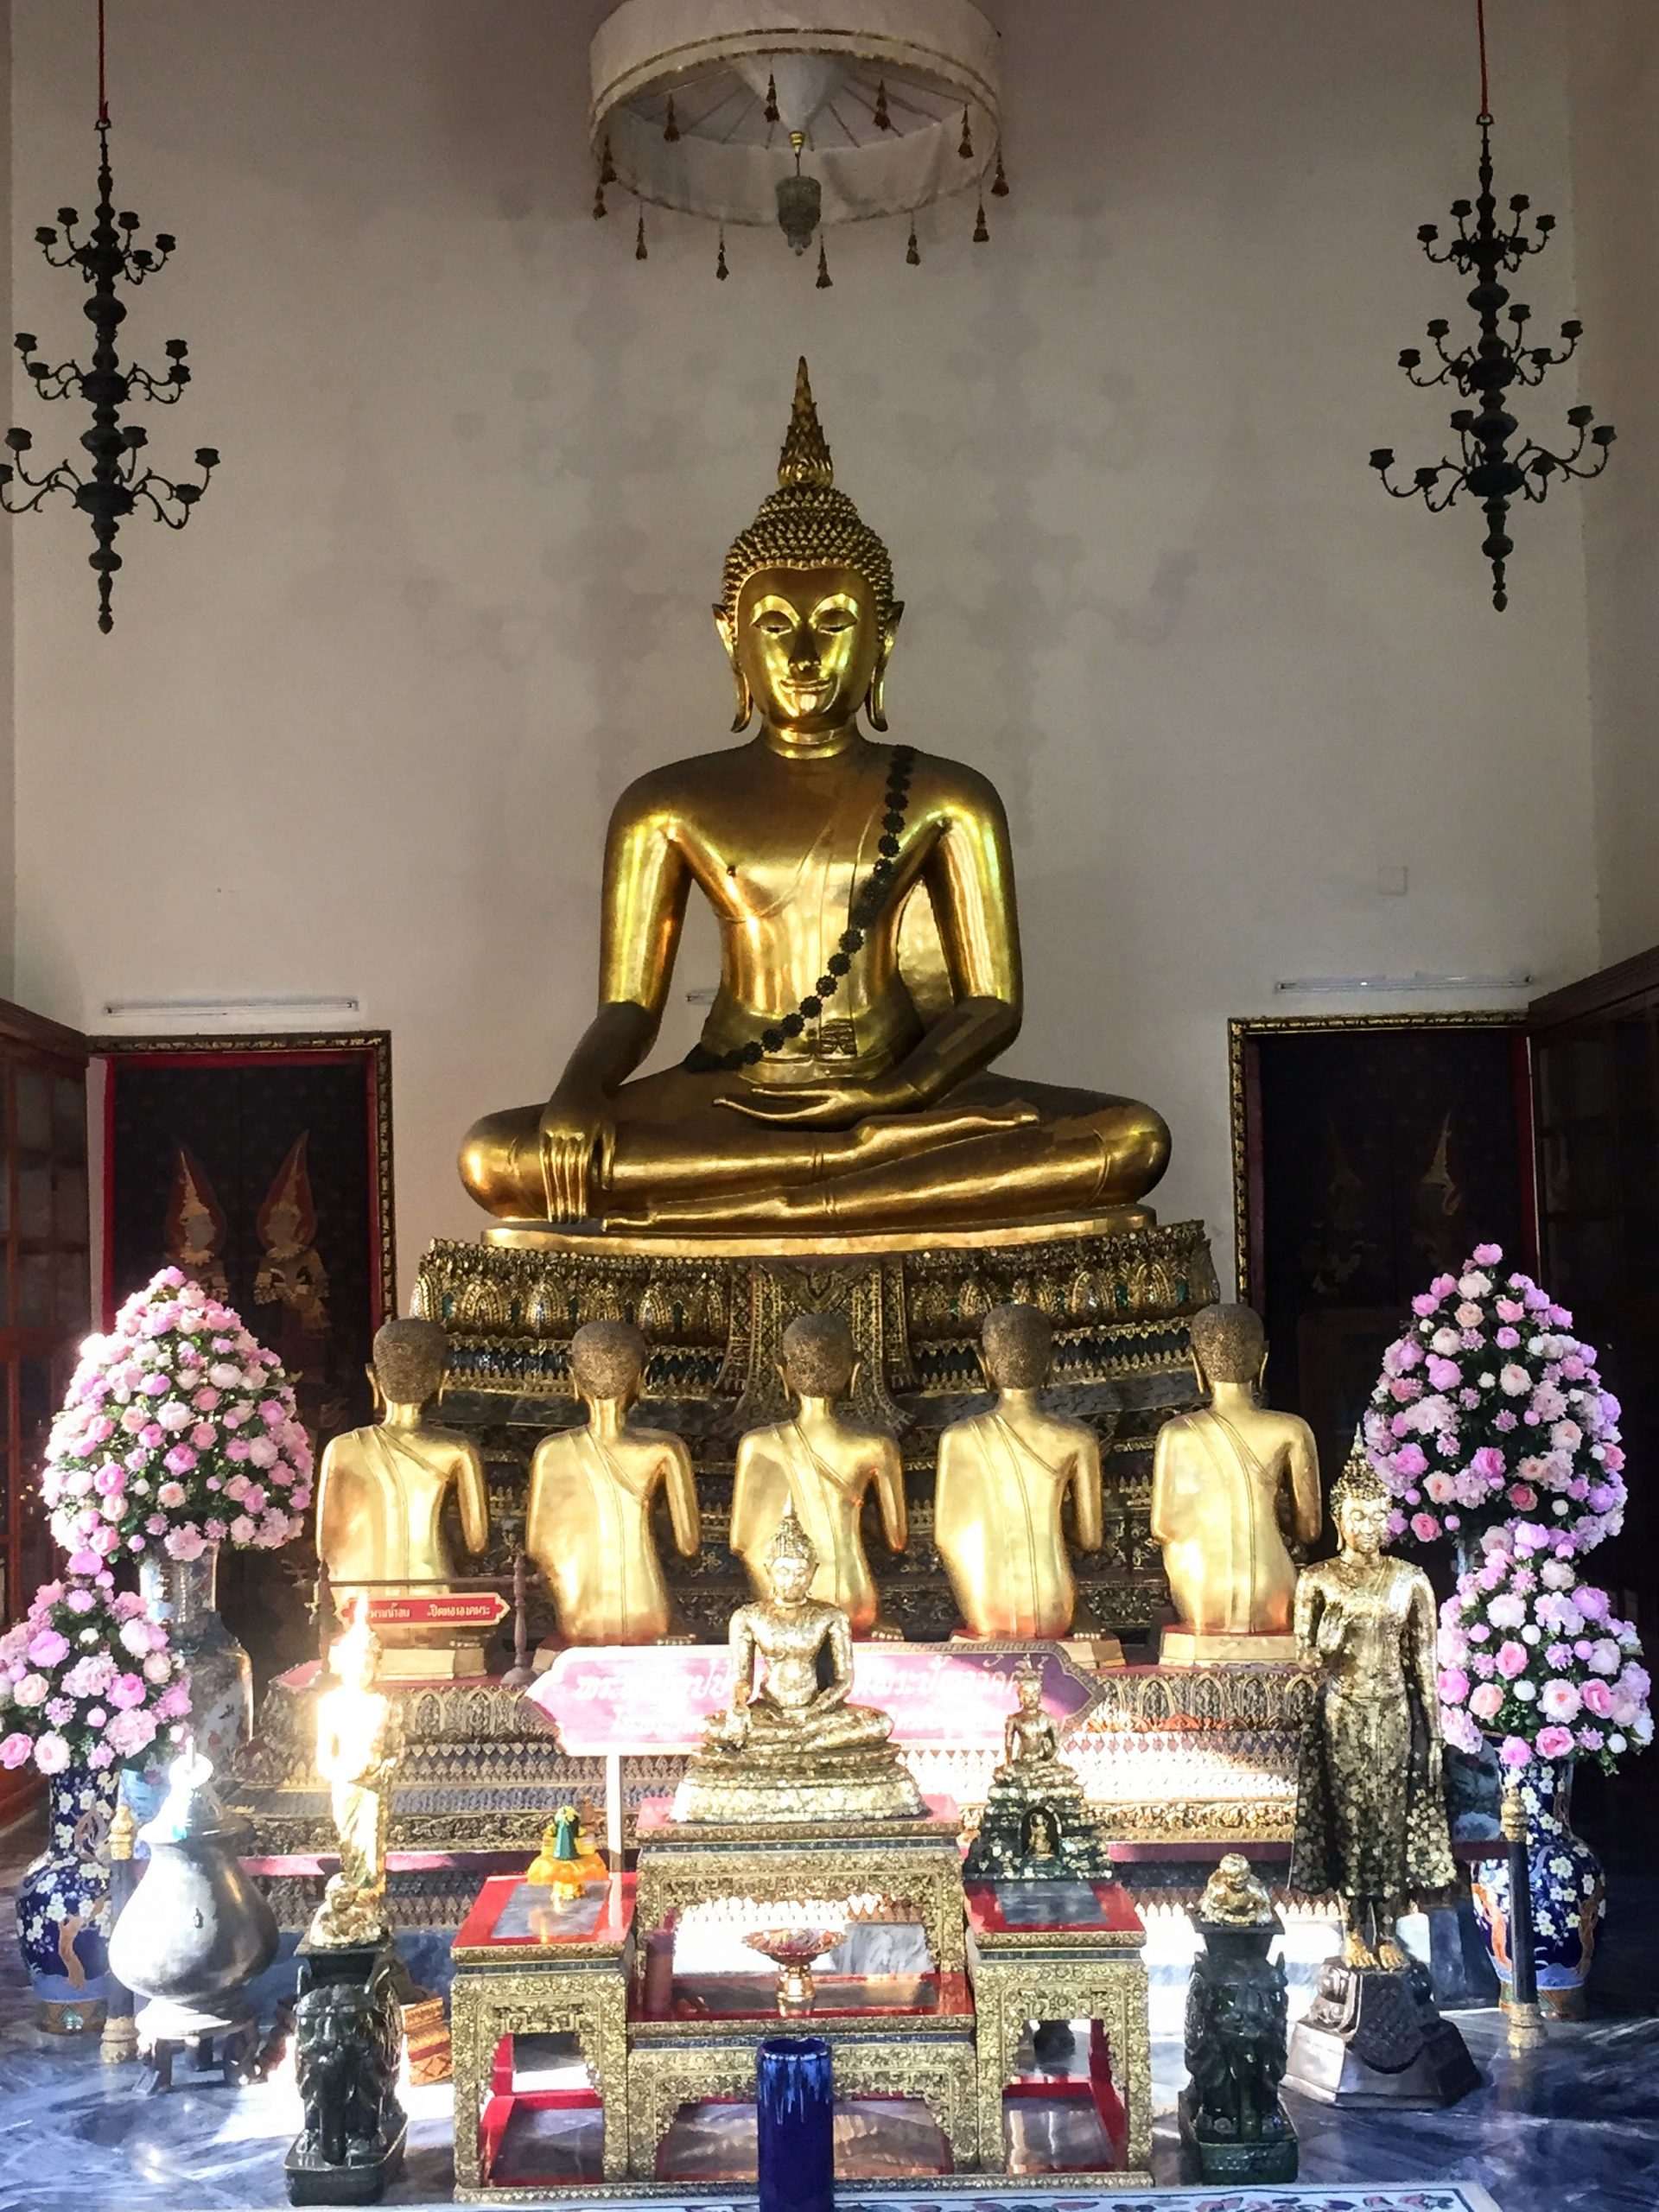 A Buddhist Temple in Bangkok, Thailand.